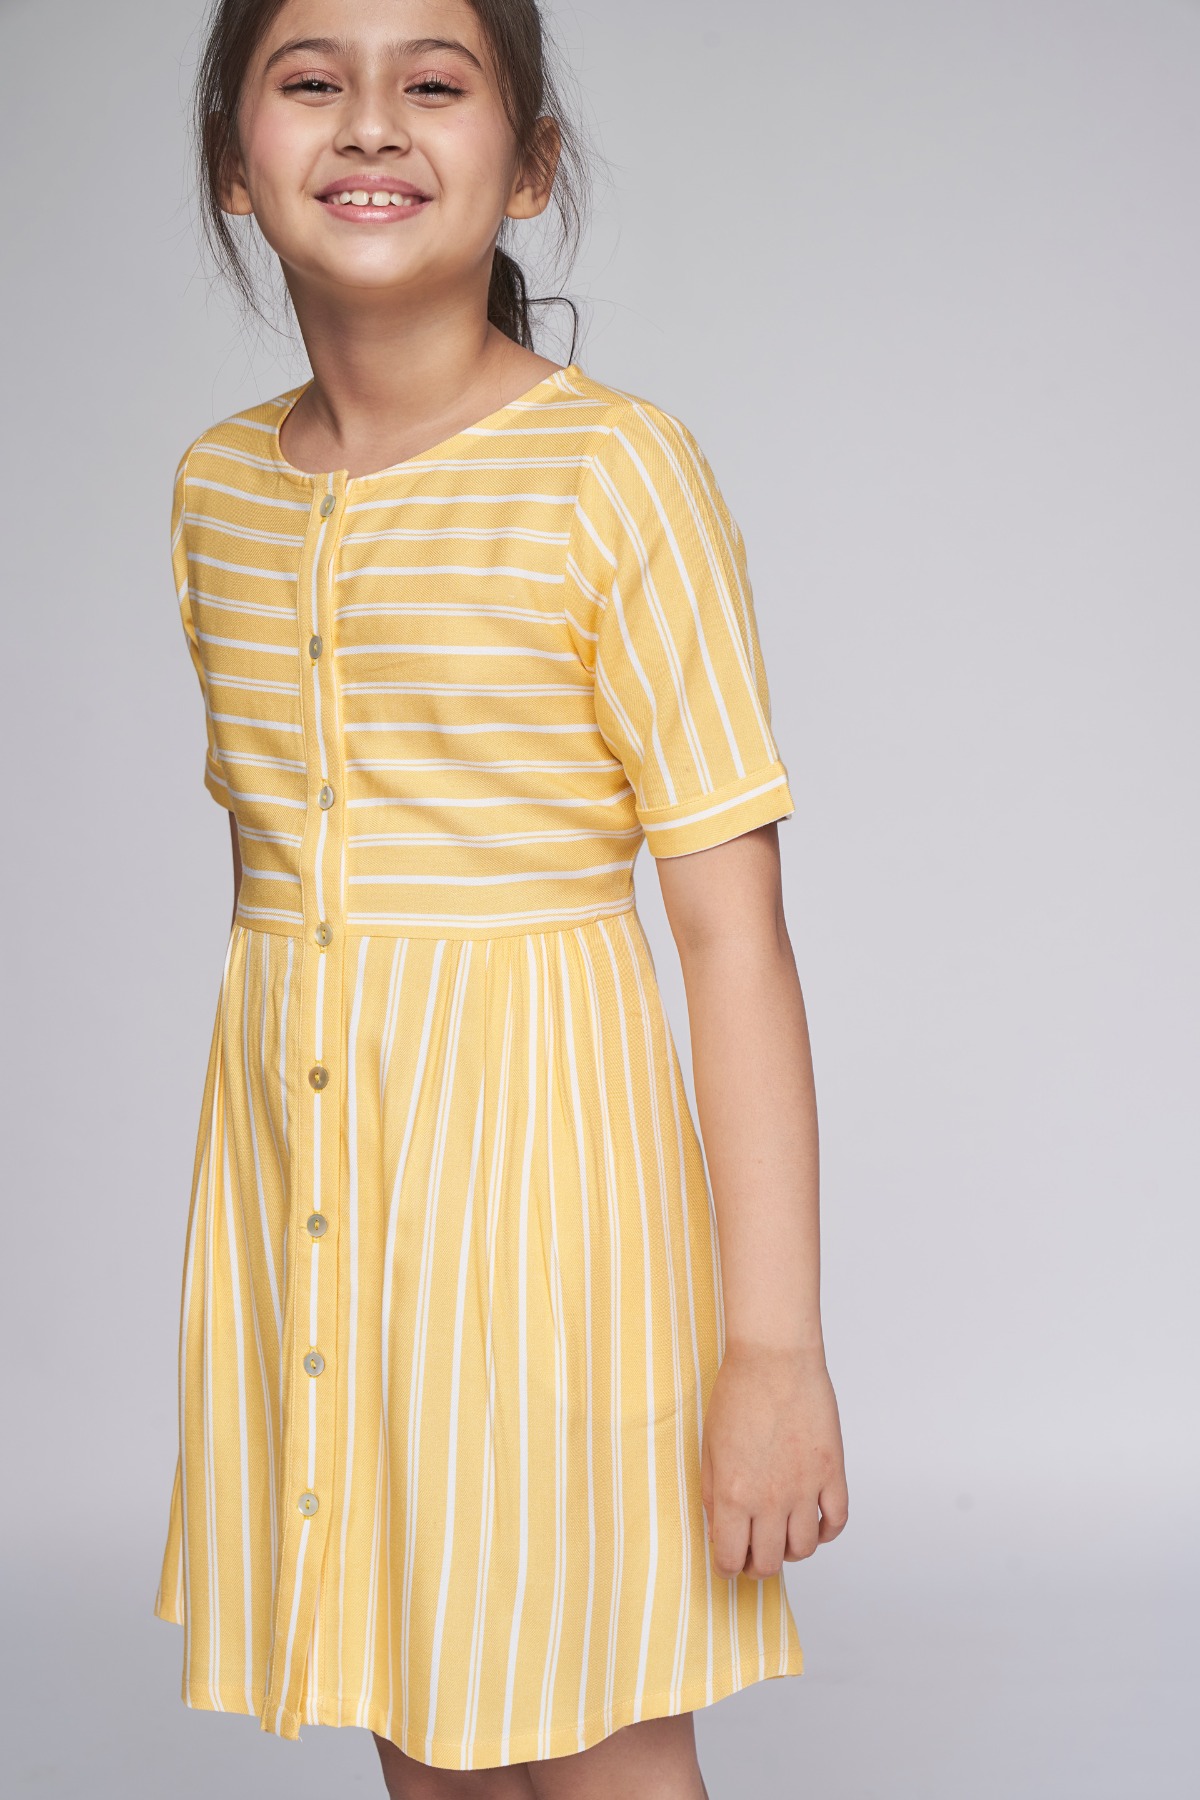 1 - Yellow Stripes Flared Dress, image 1